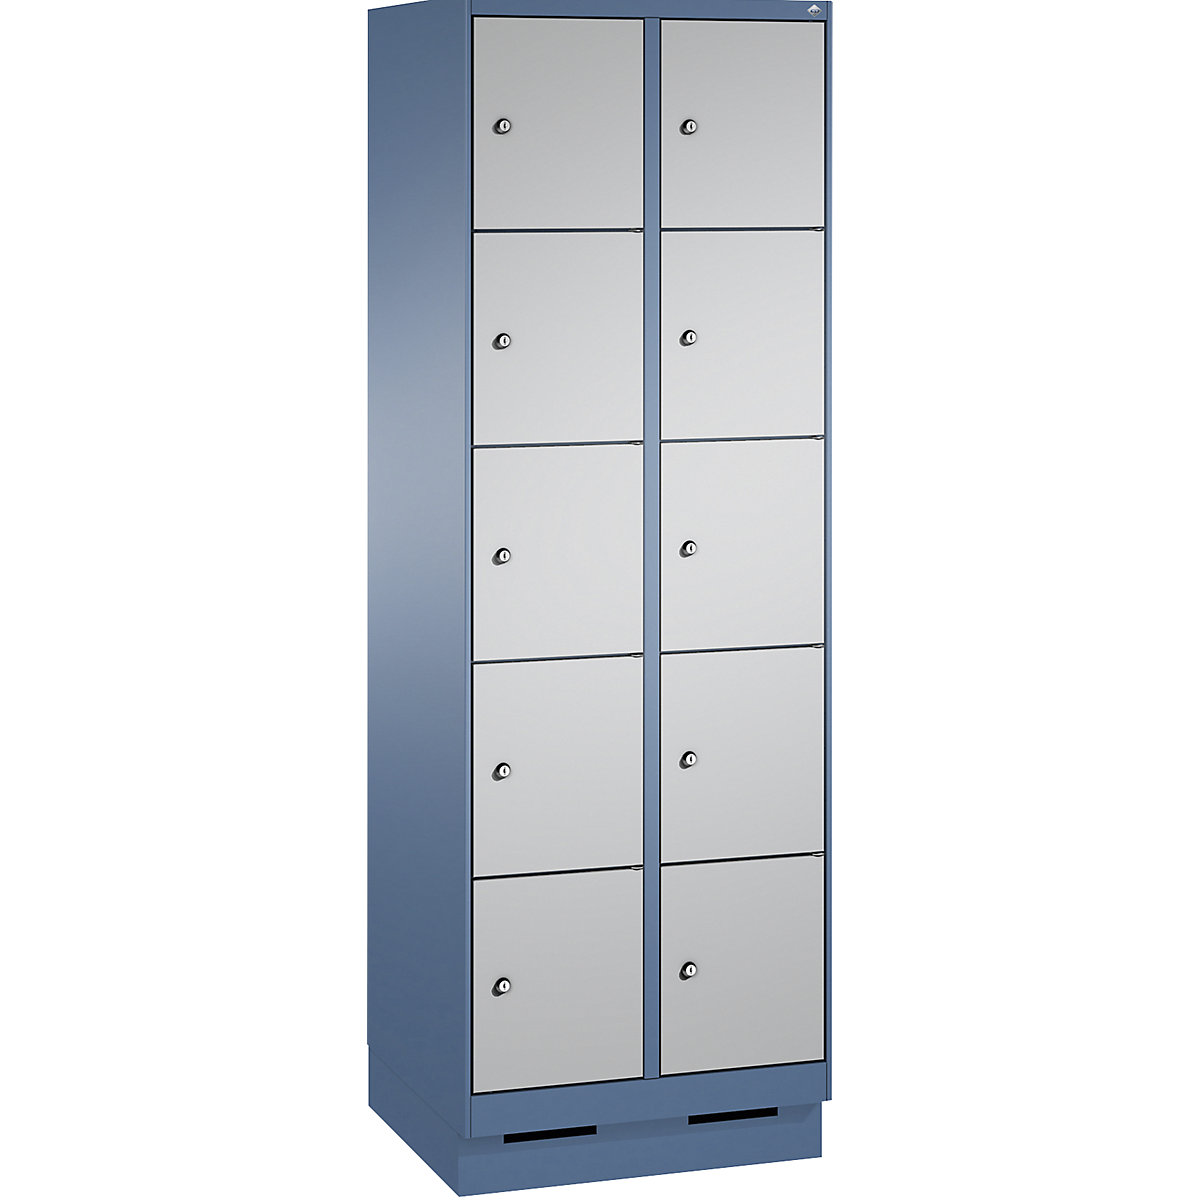 Armário de cacifos EVOLO, com rodapé – C+P, 2 compartimentos, 5 cacifos cada, largura do compartimento 300 mm, azul distante / cinza alumínio-11